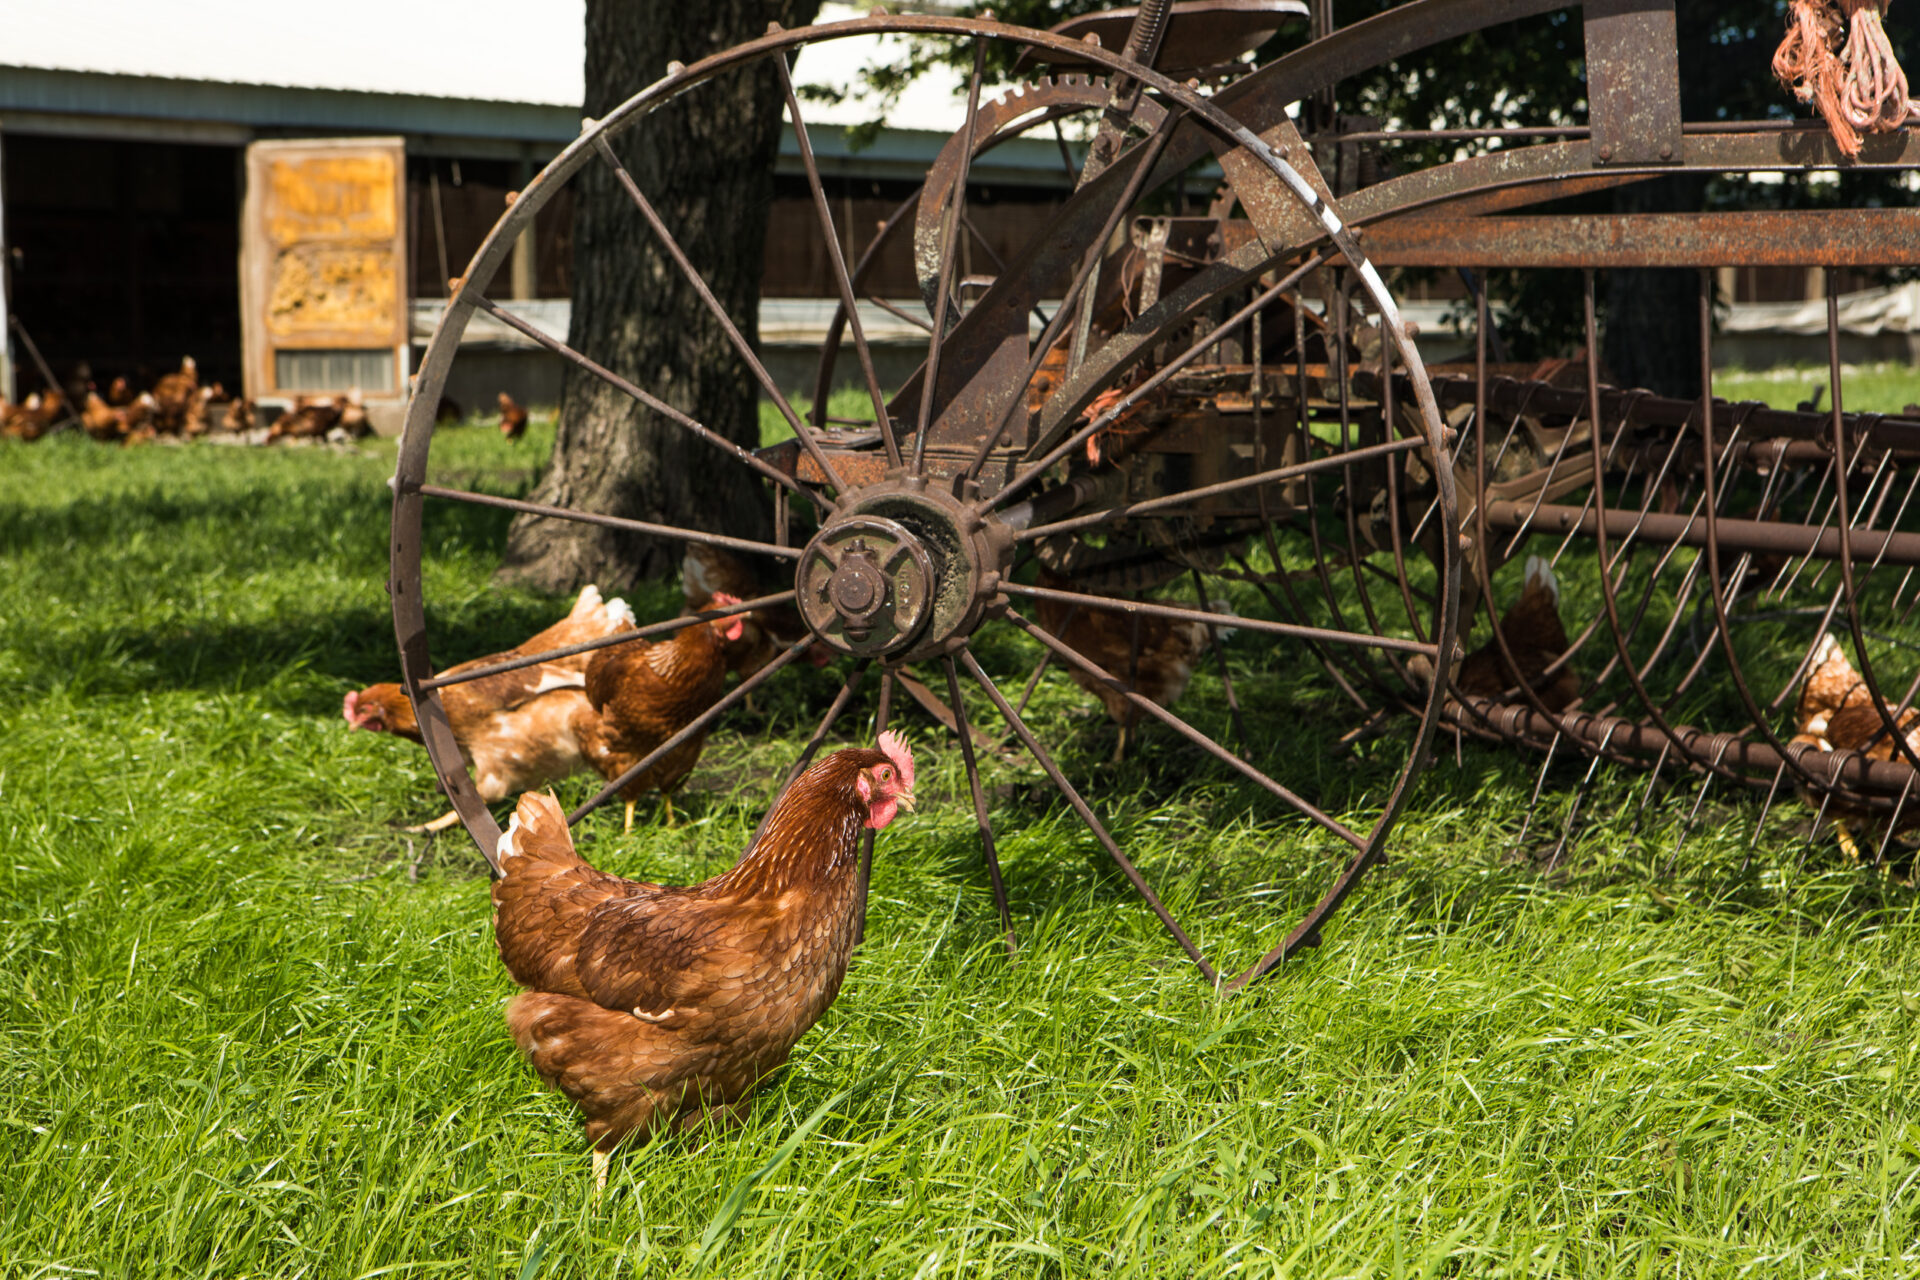 Hens around Amish farm implement